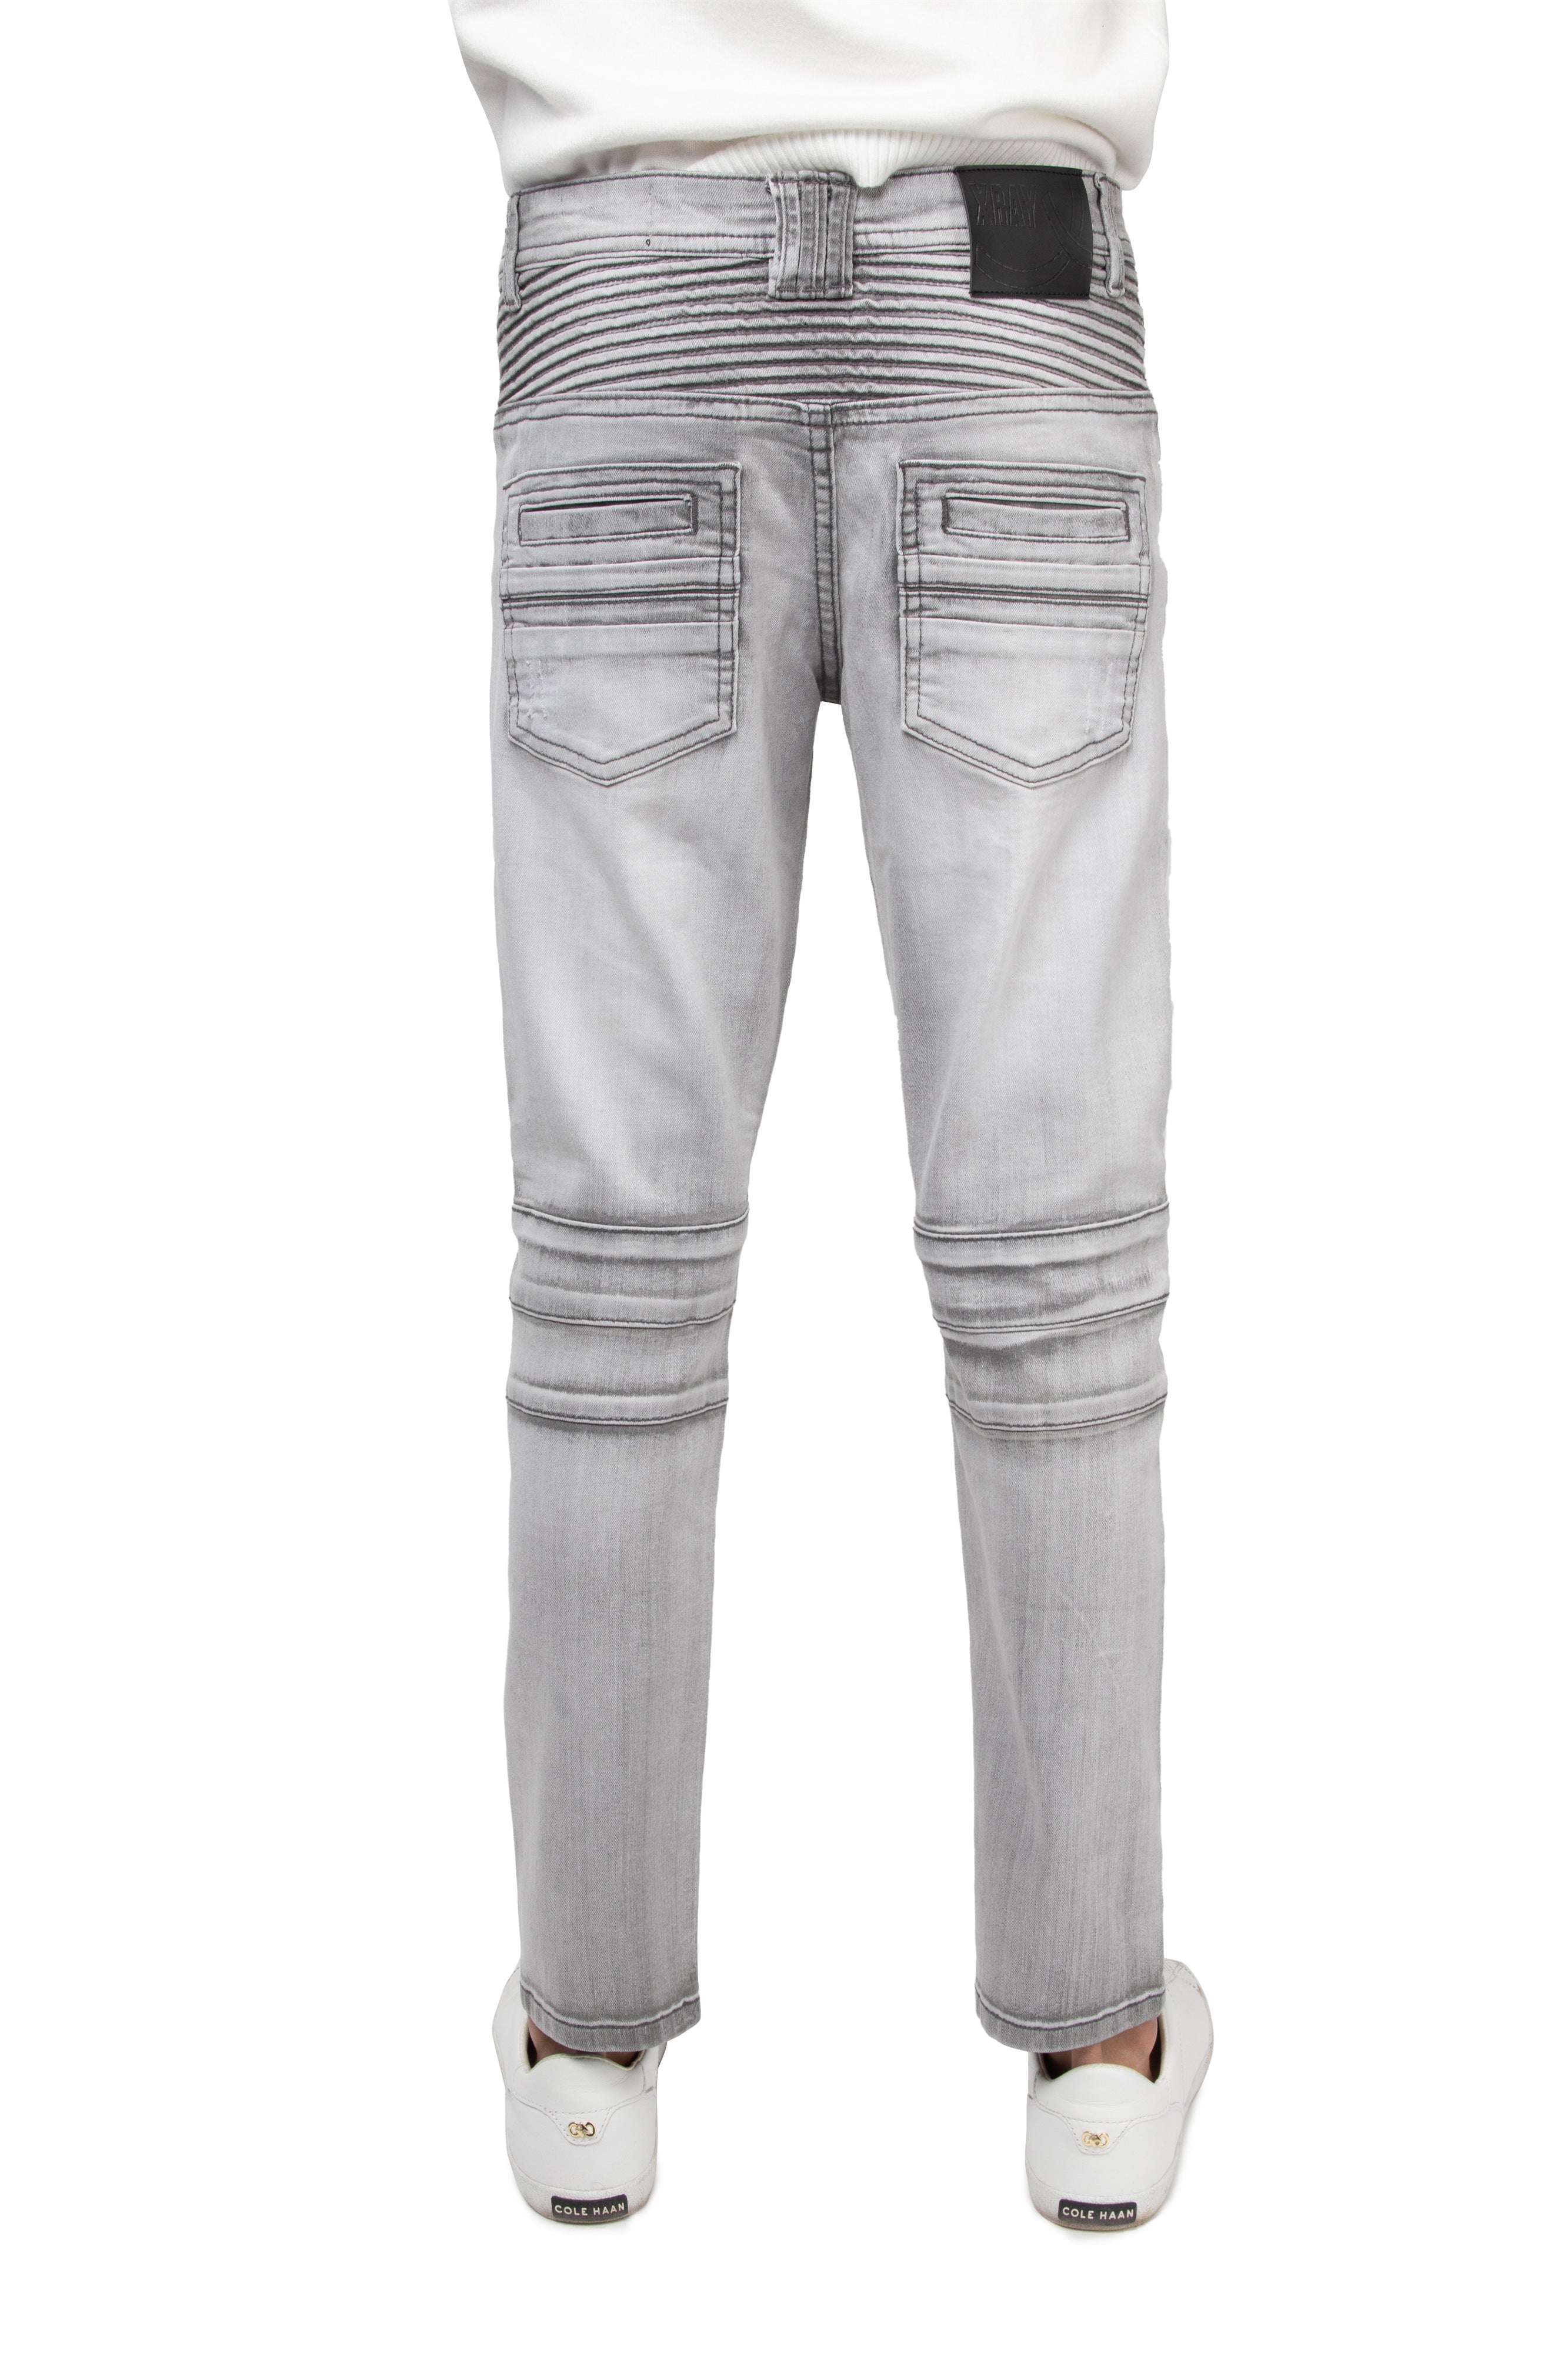 BXP-96107  XRAY Slim Fit Biker Pants for Boys Skinny Moto Jeans